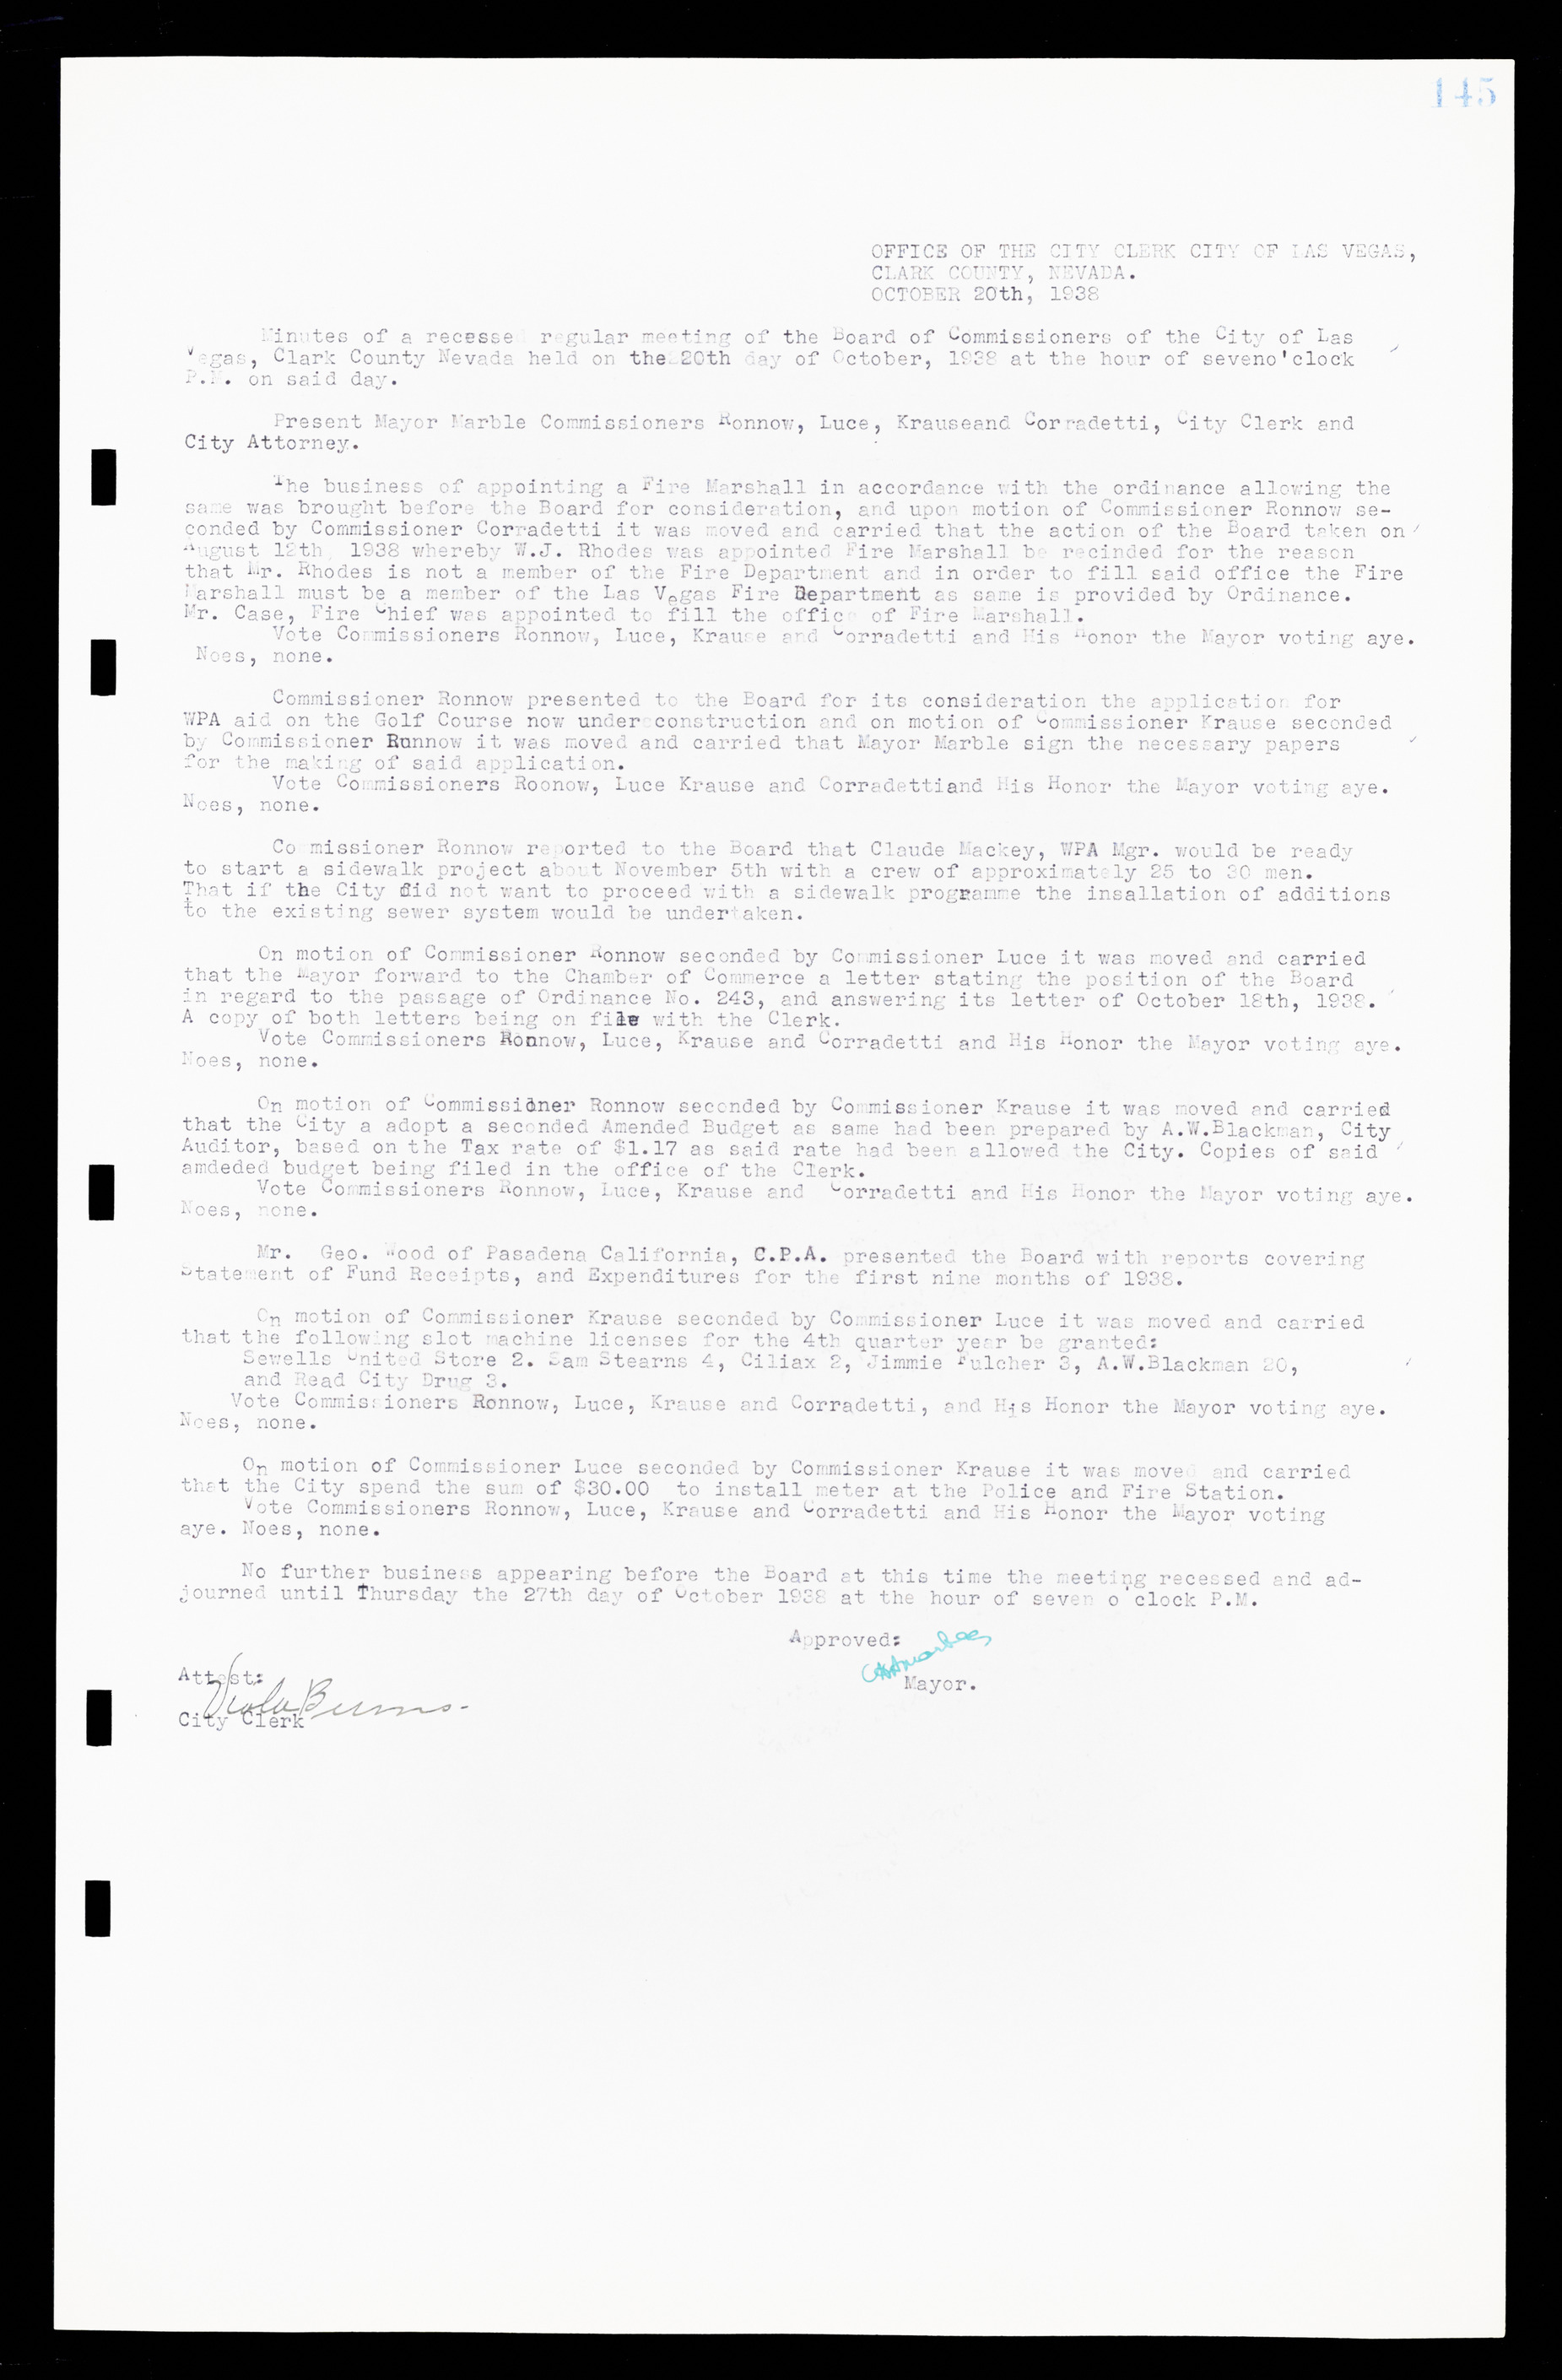 Las Vegas City Commission Minutes, February 17, 1937 to August 4, 1942, lvc000004-158